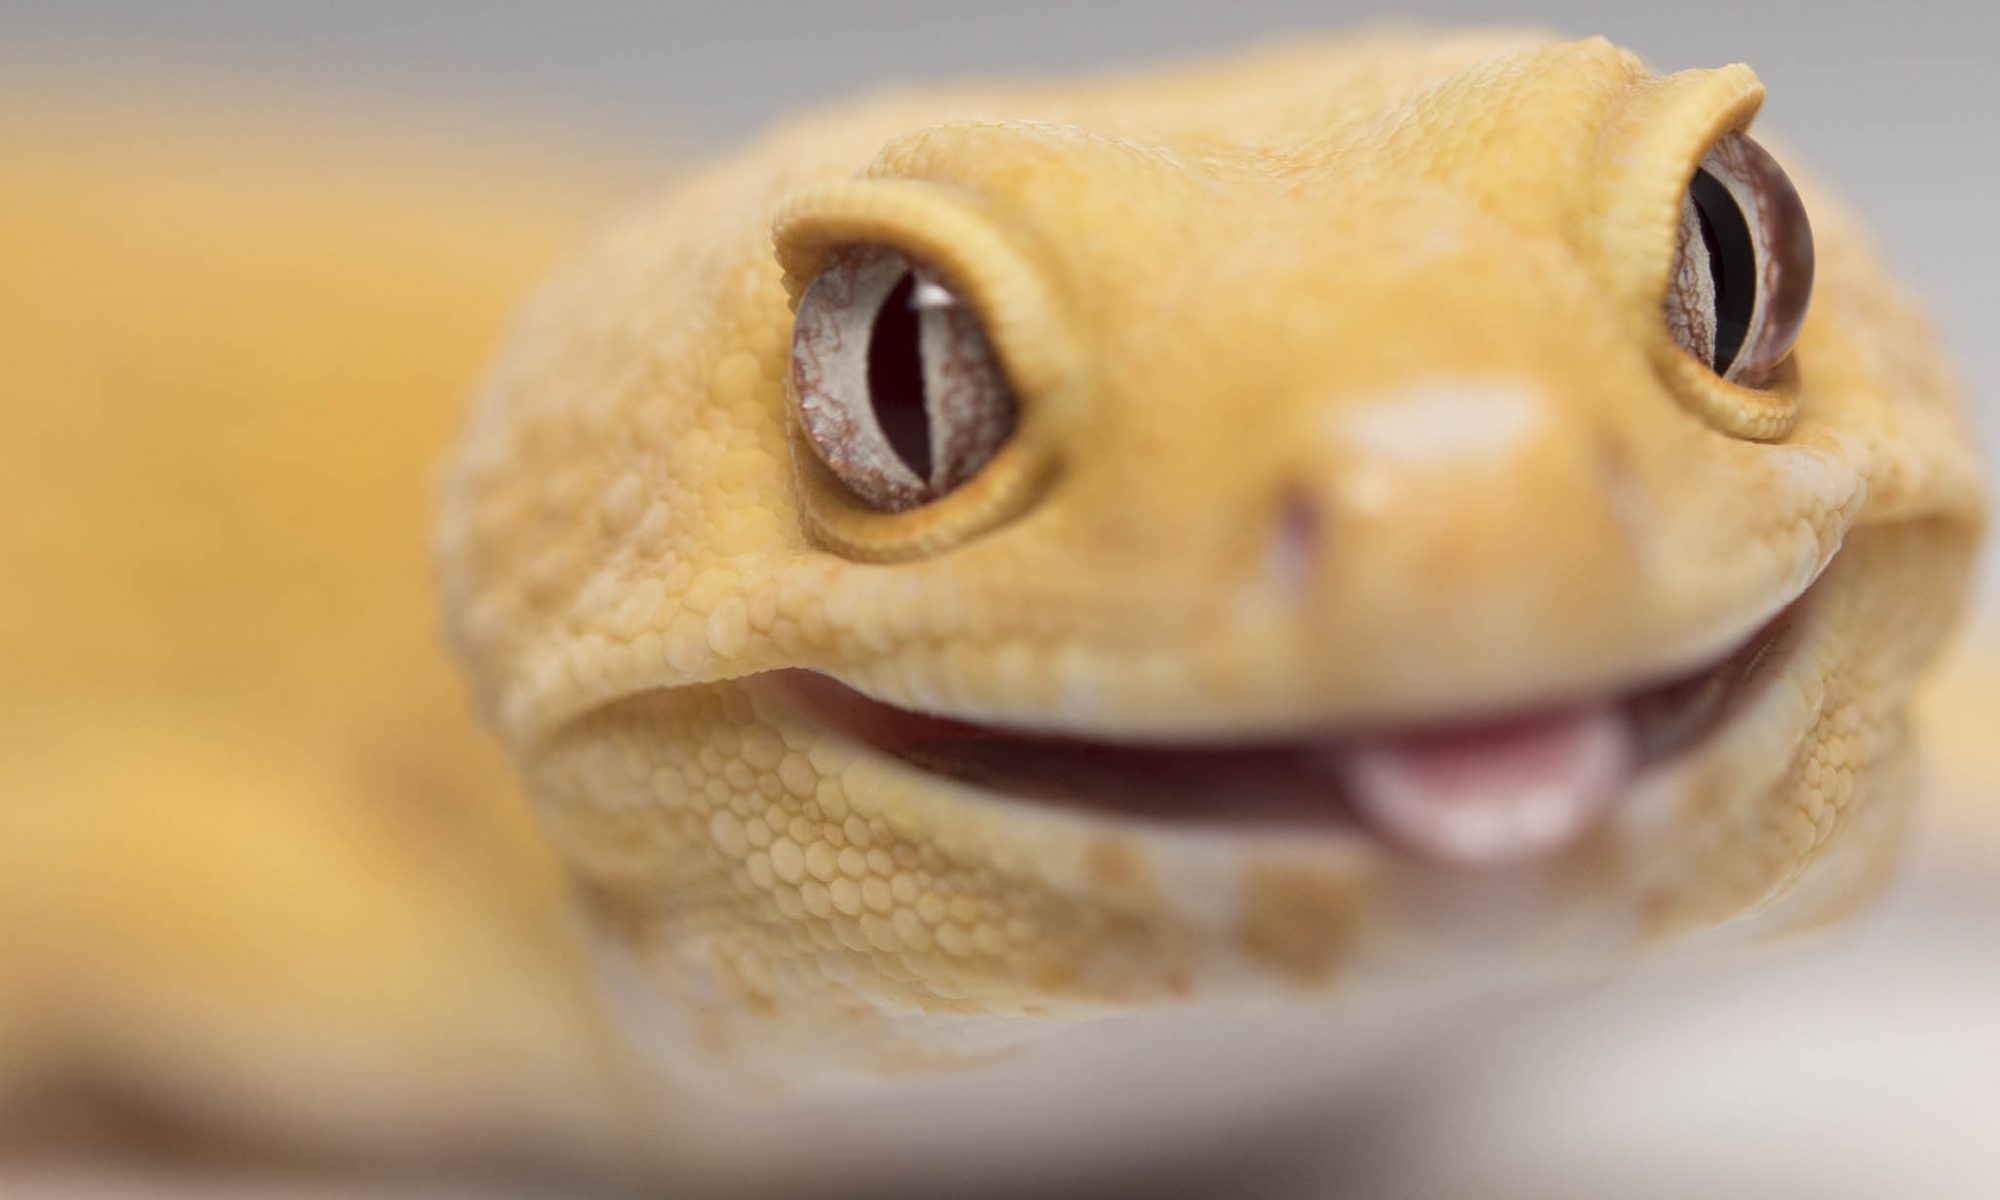 onlinegeckos.com should I get male or female leopard gecko as pets giant tremper sunglow